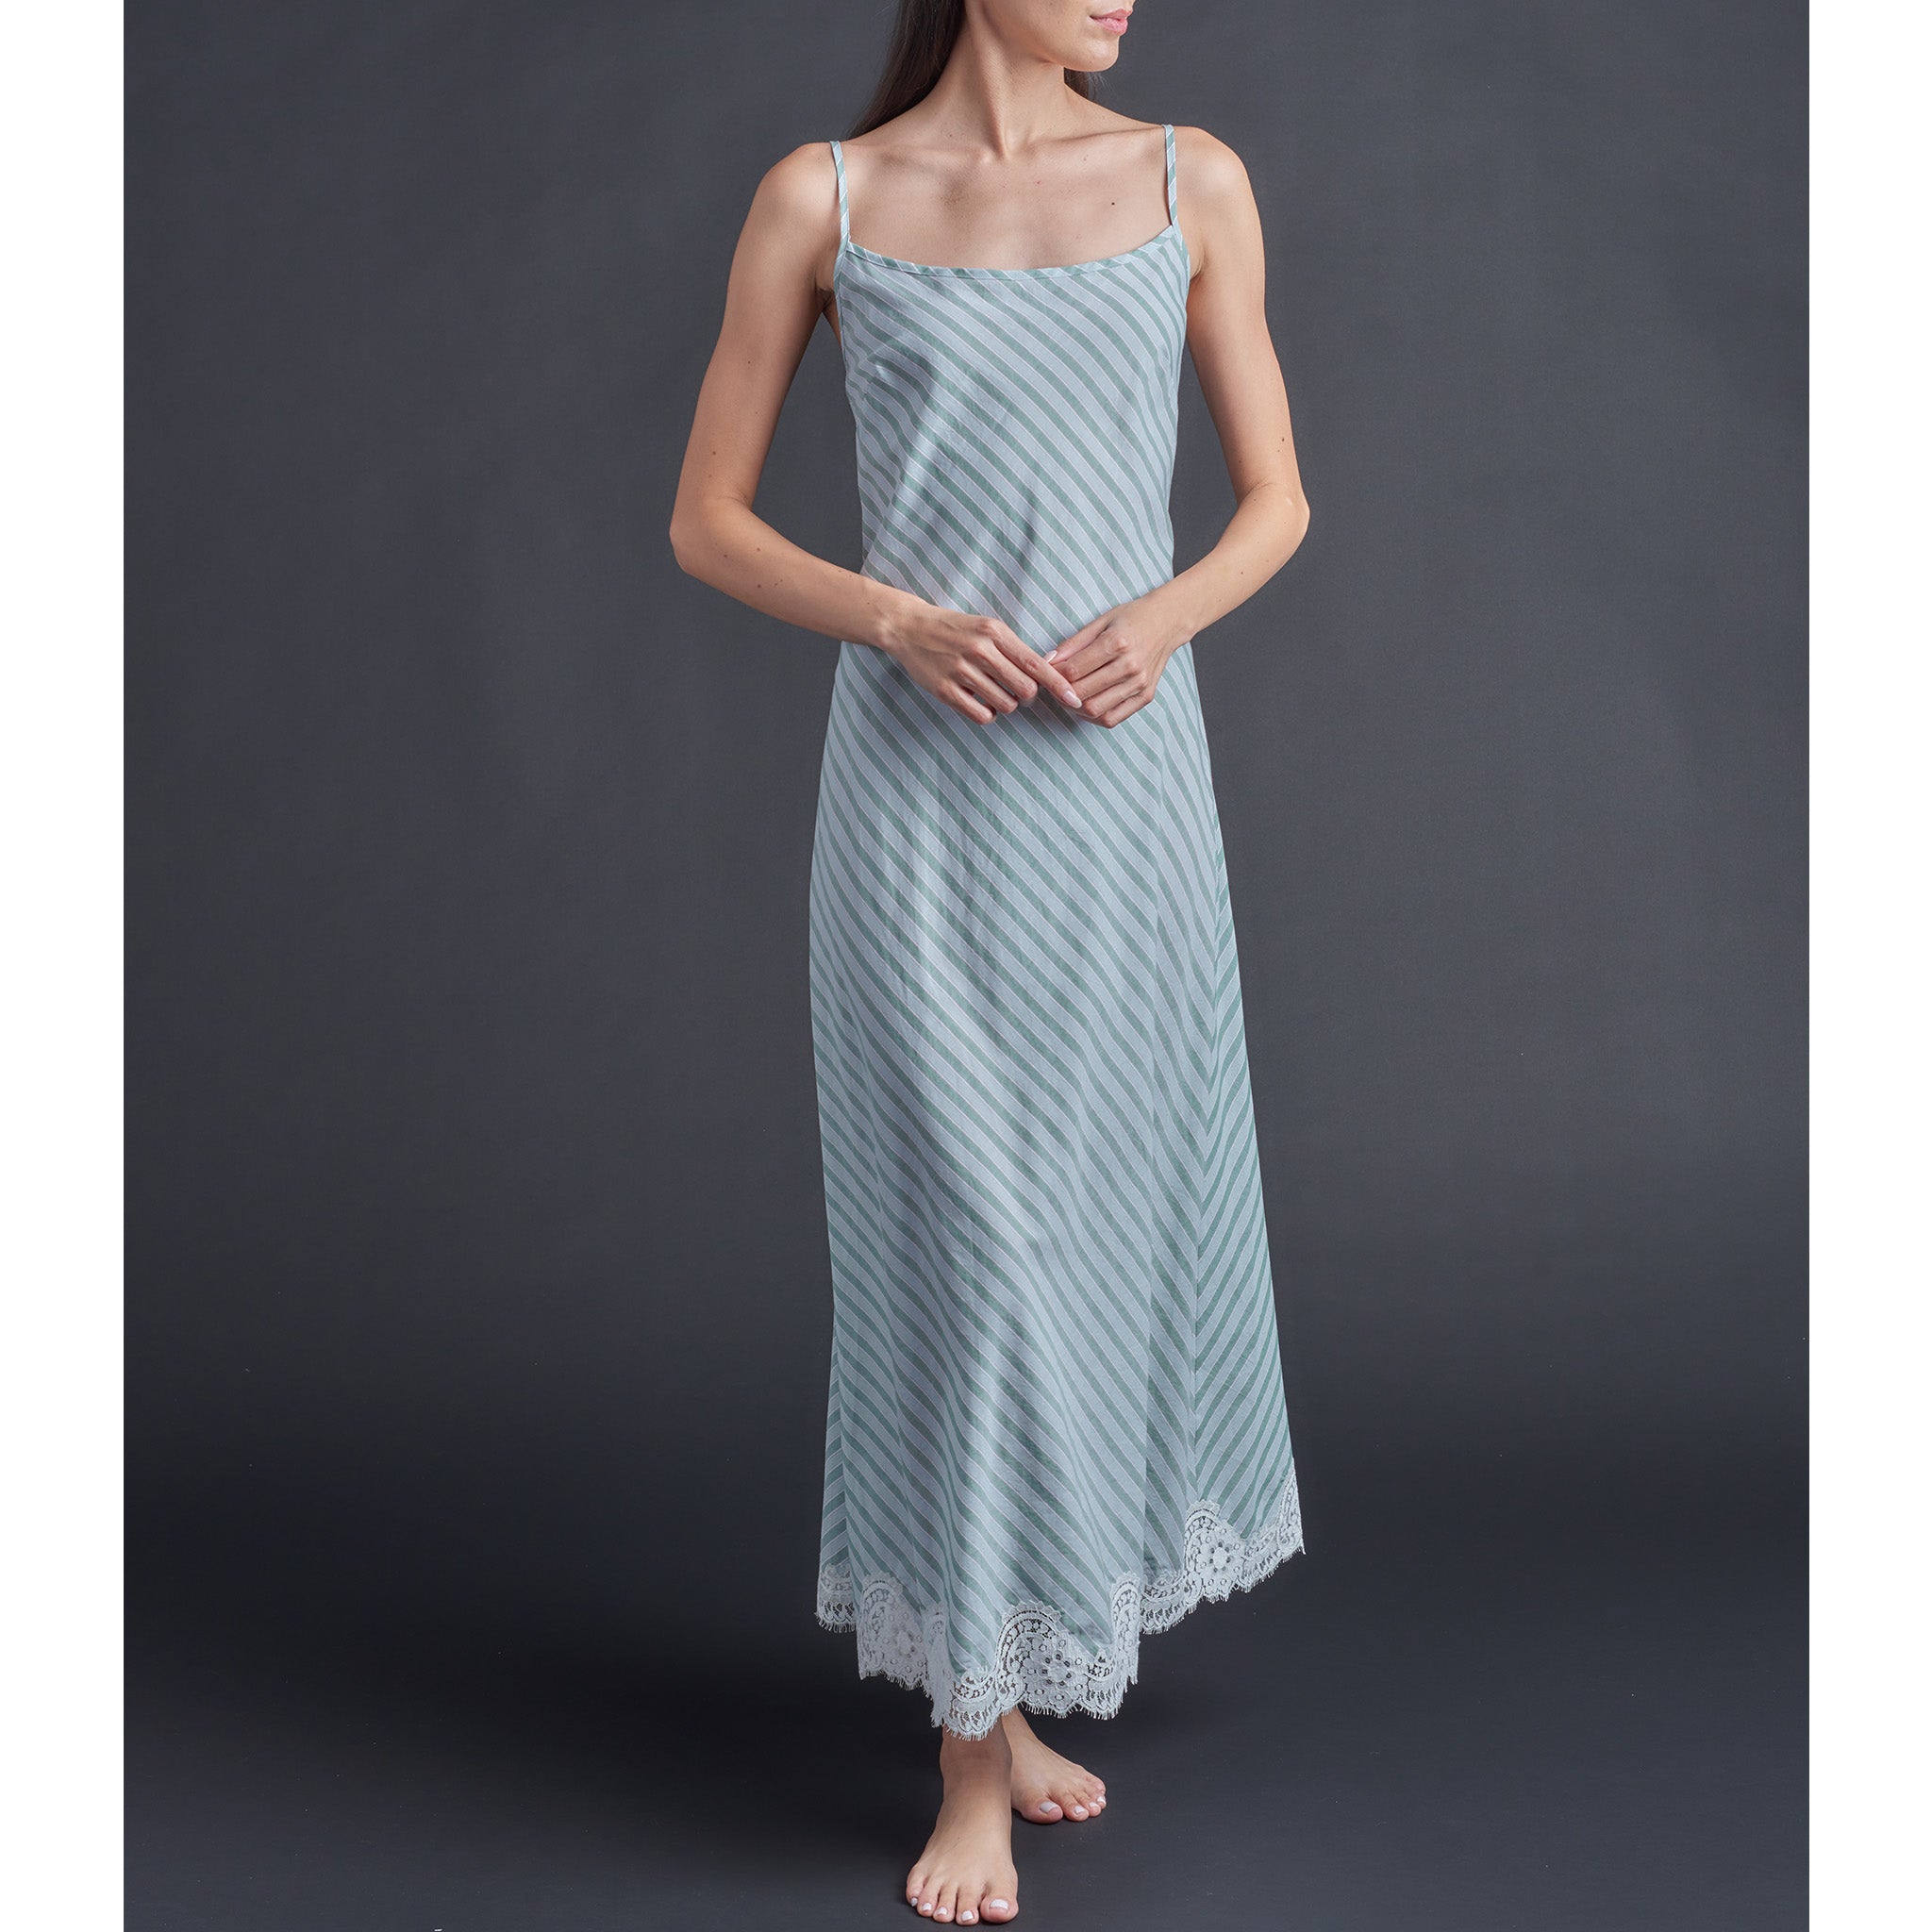 Juno Slip Dress in Italian Cotton Green Blue Stripe with Lace